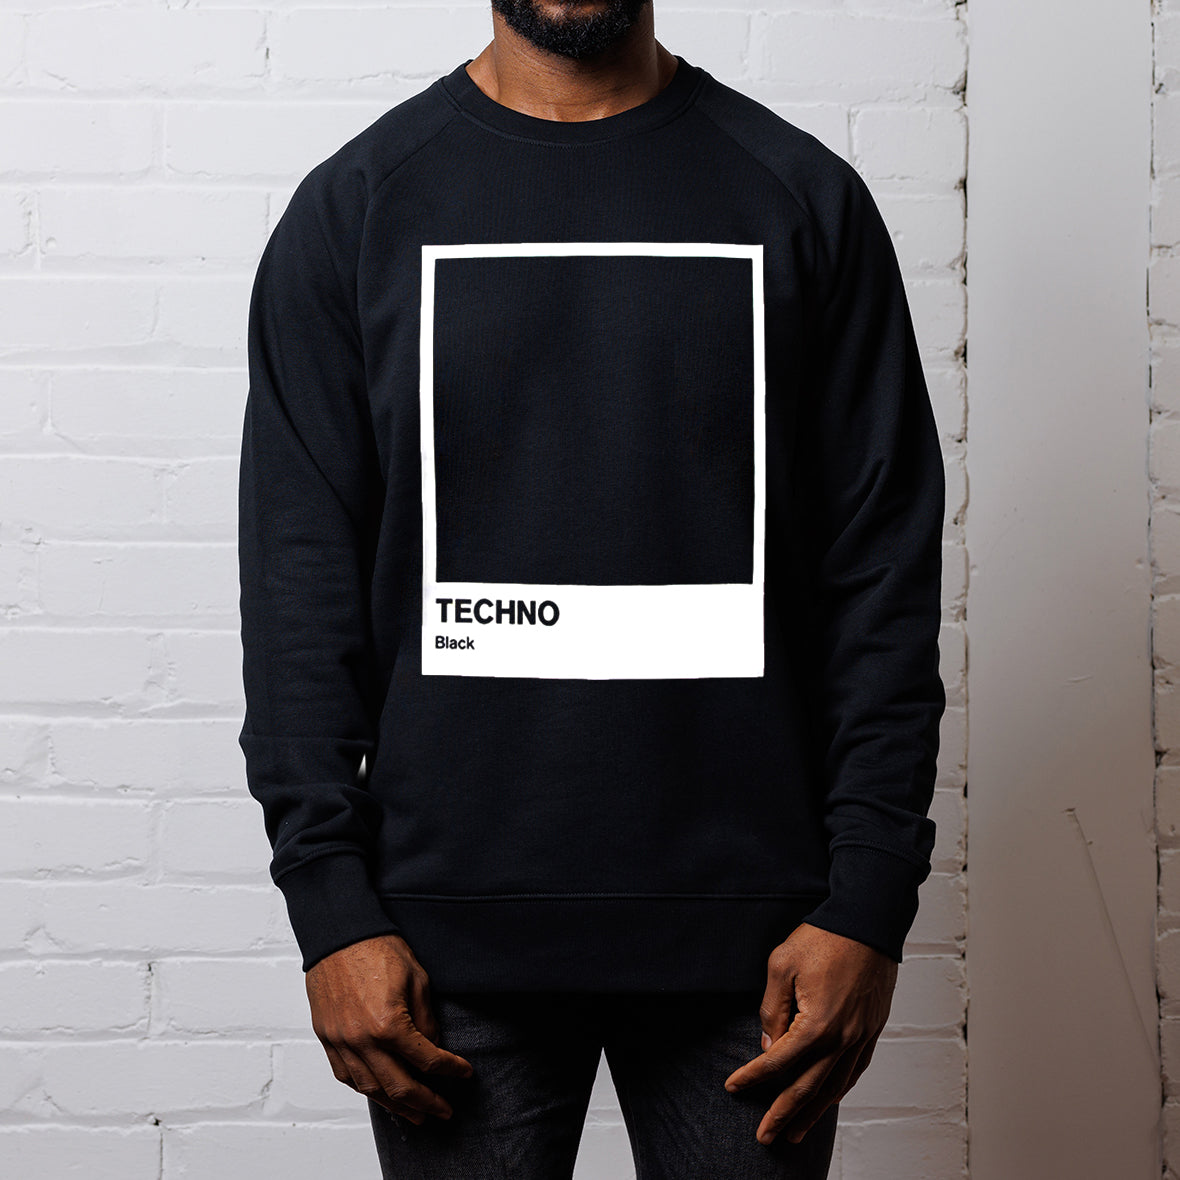 Techno Black - Sweatshirt - Black